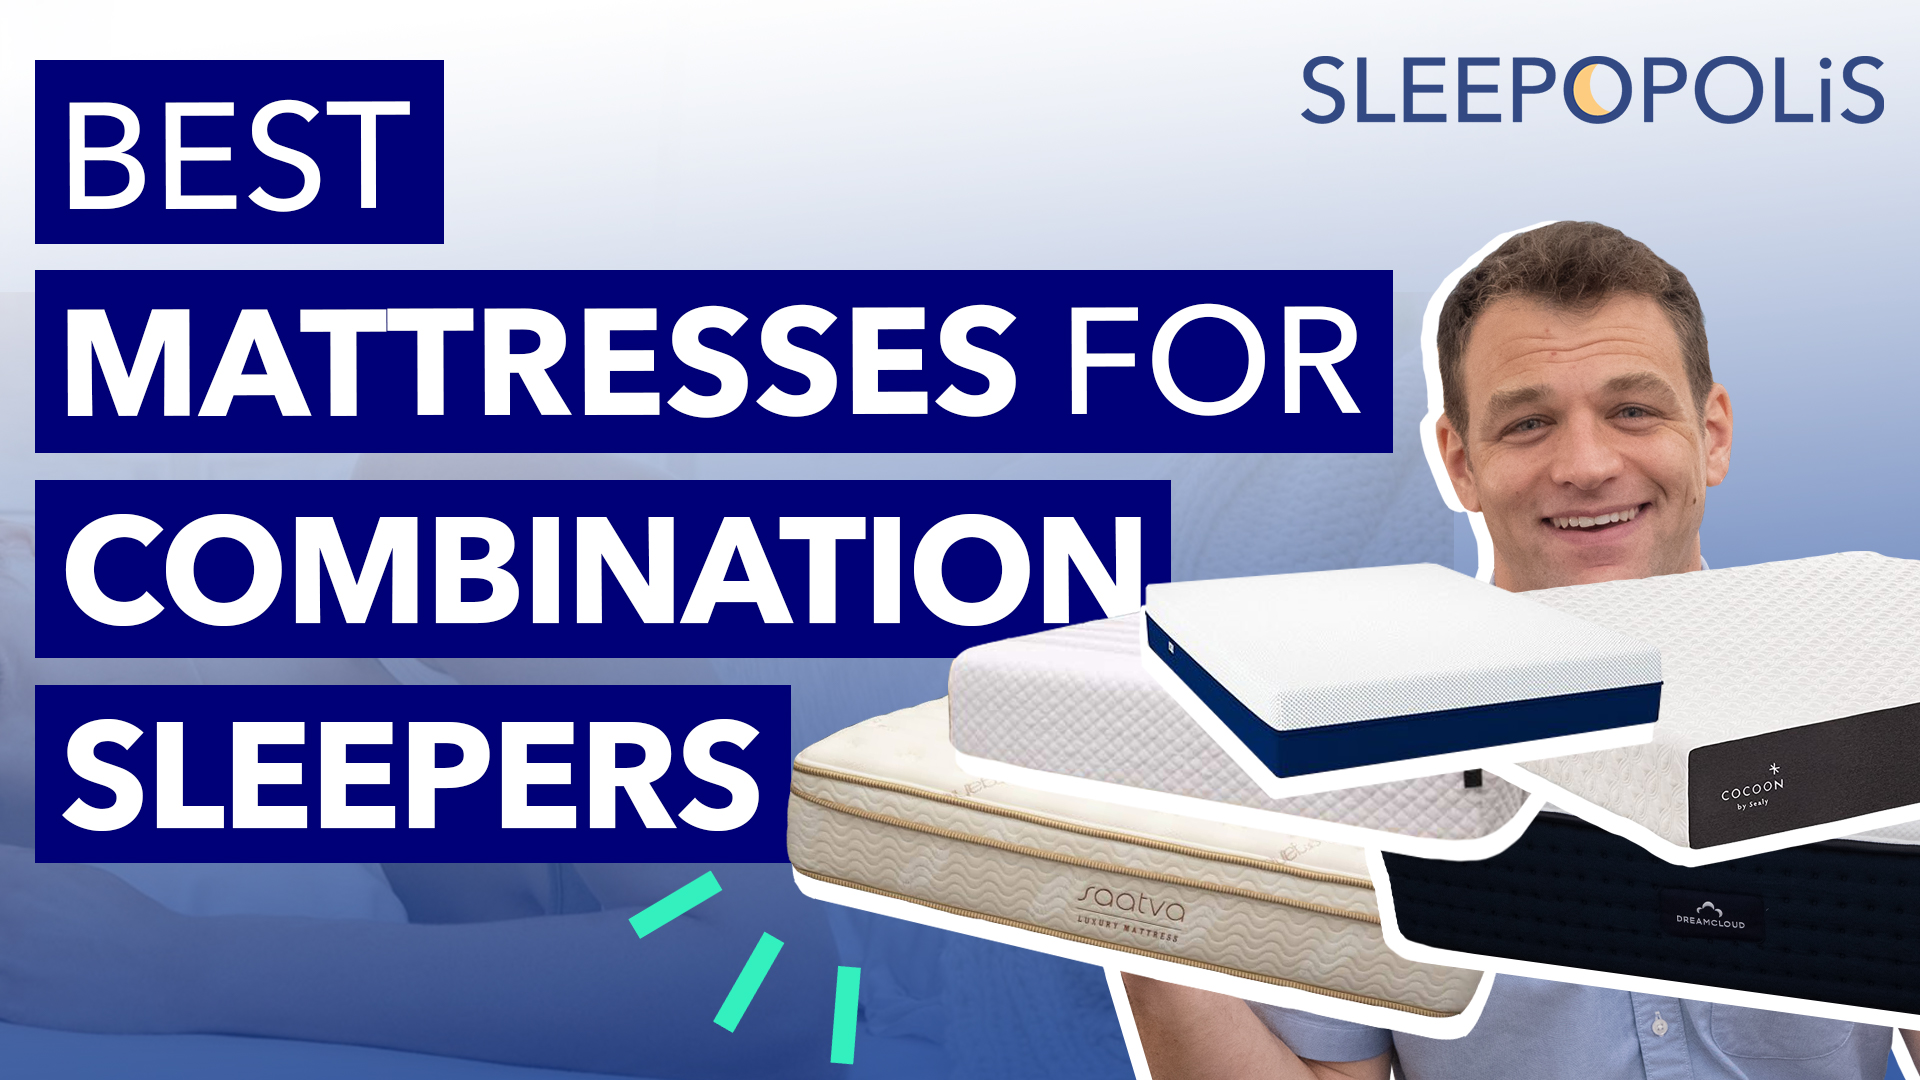 Best Mattress for Combination Sleepers